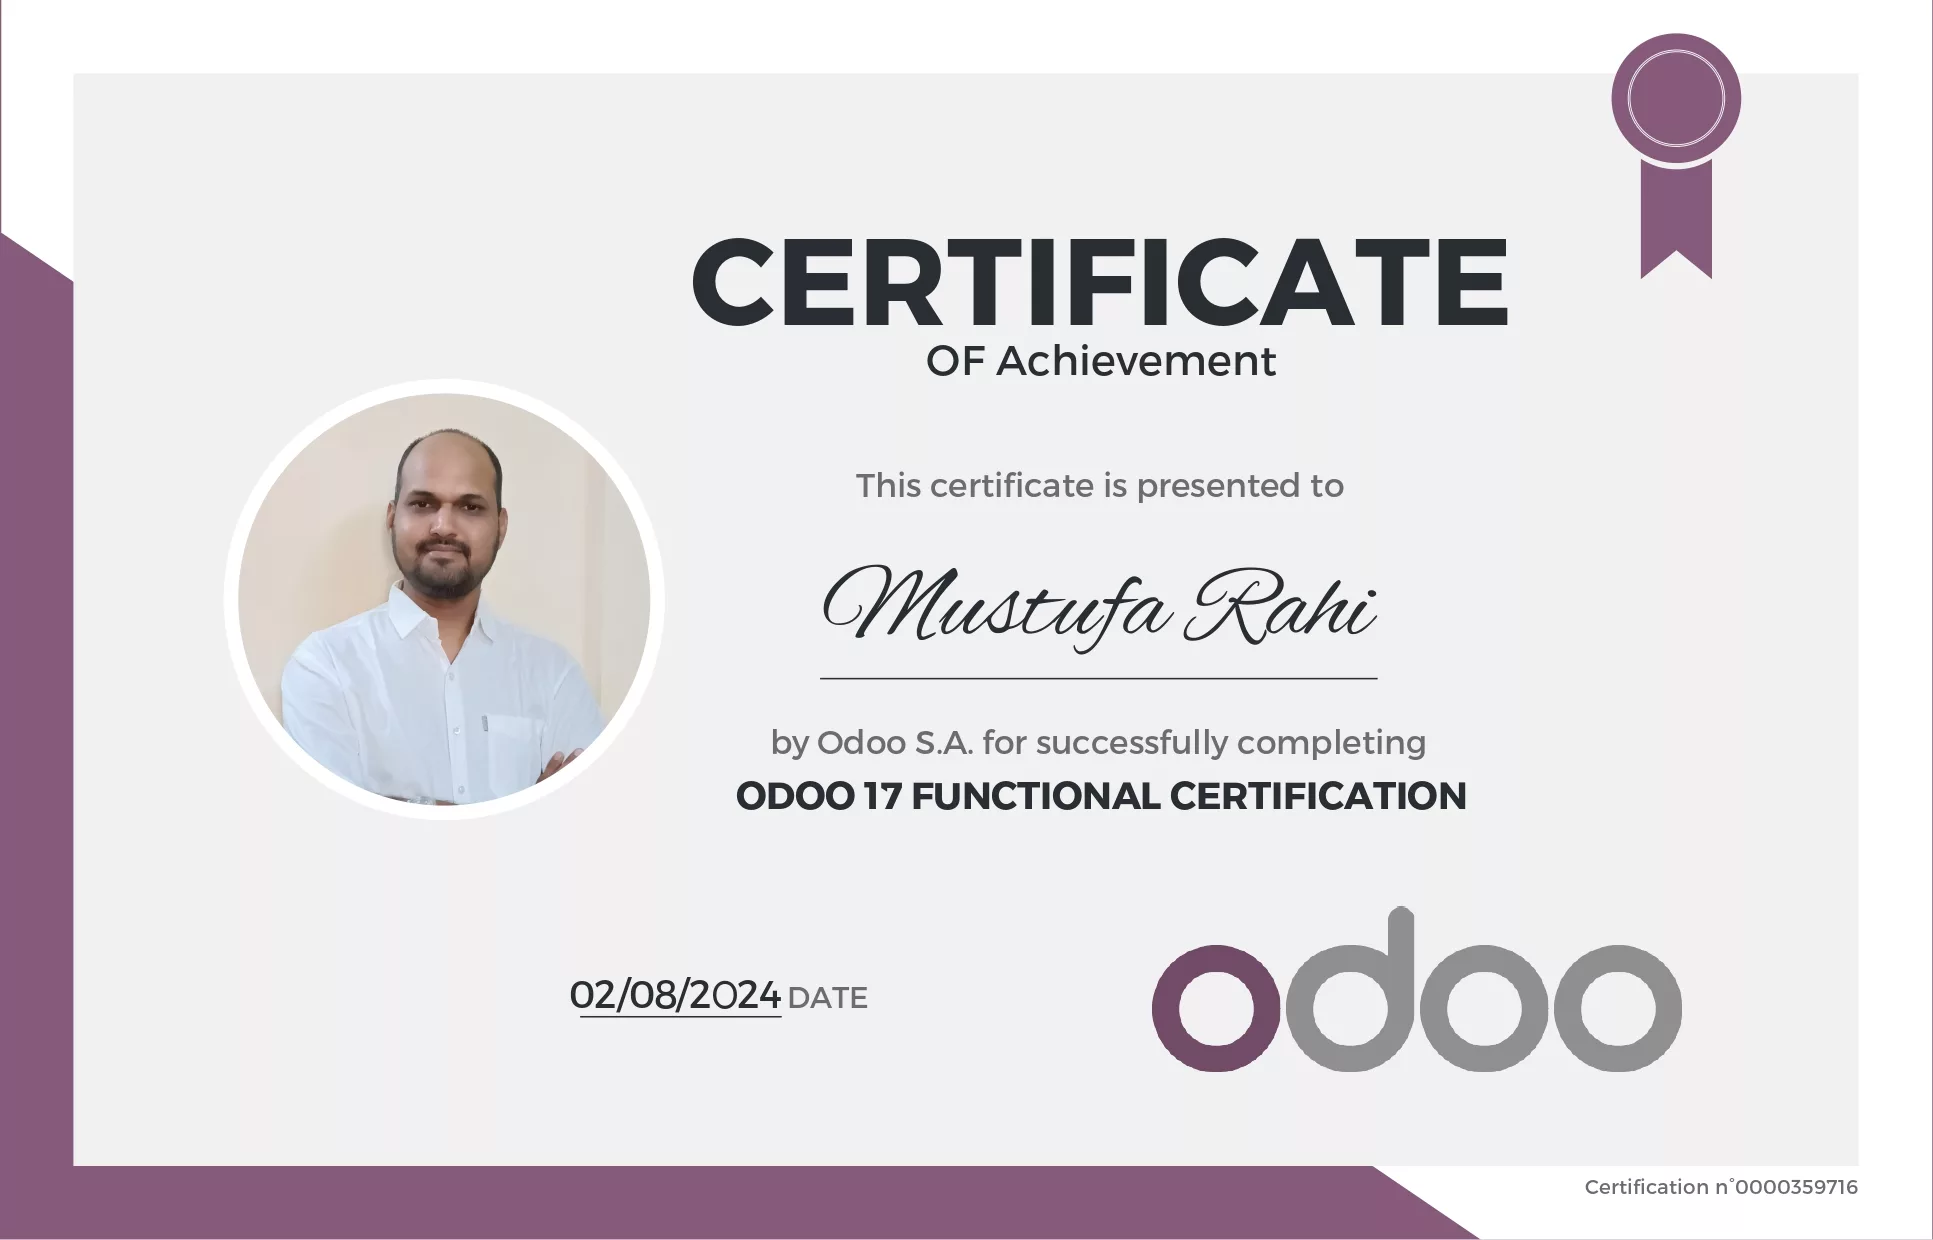 odoo Certification - Mustufa rahi